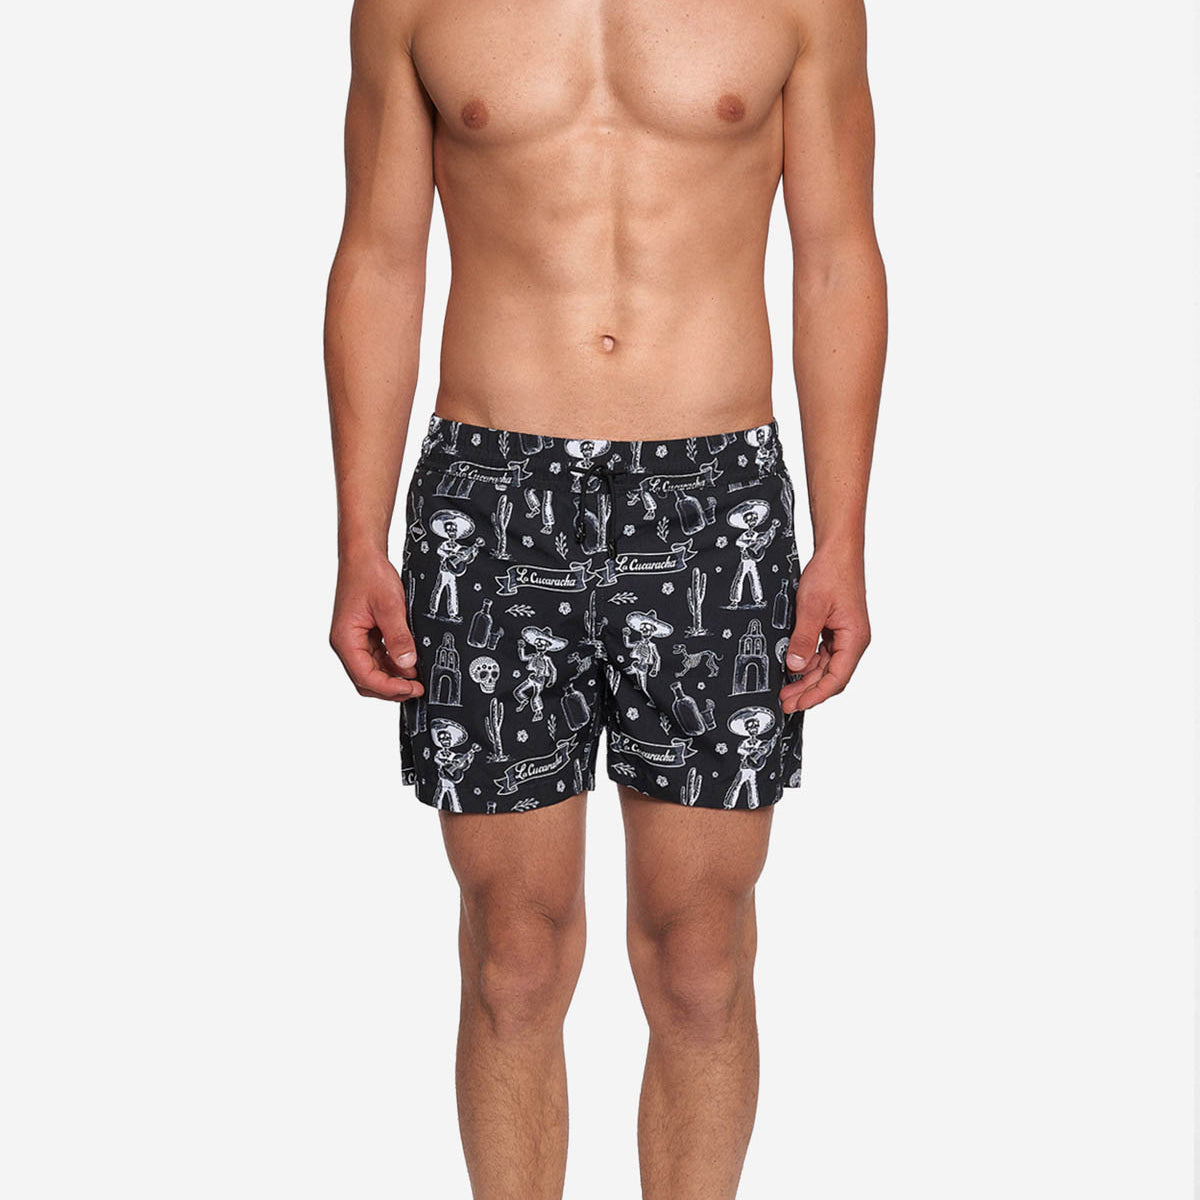 Model wearing black mid length swim trunks with white print